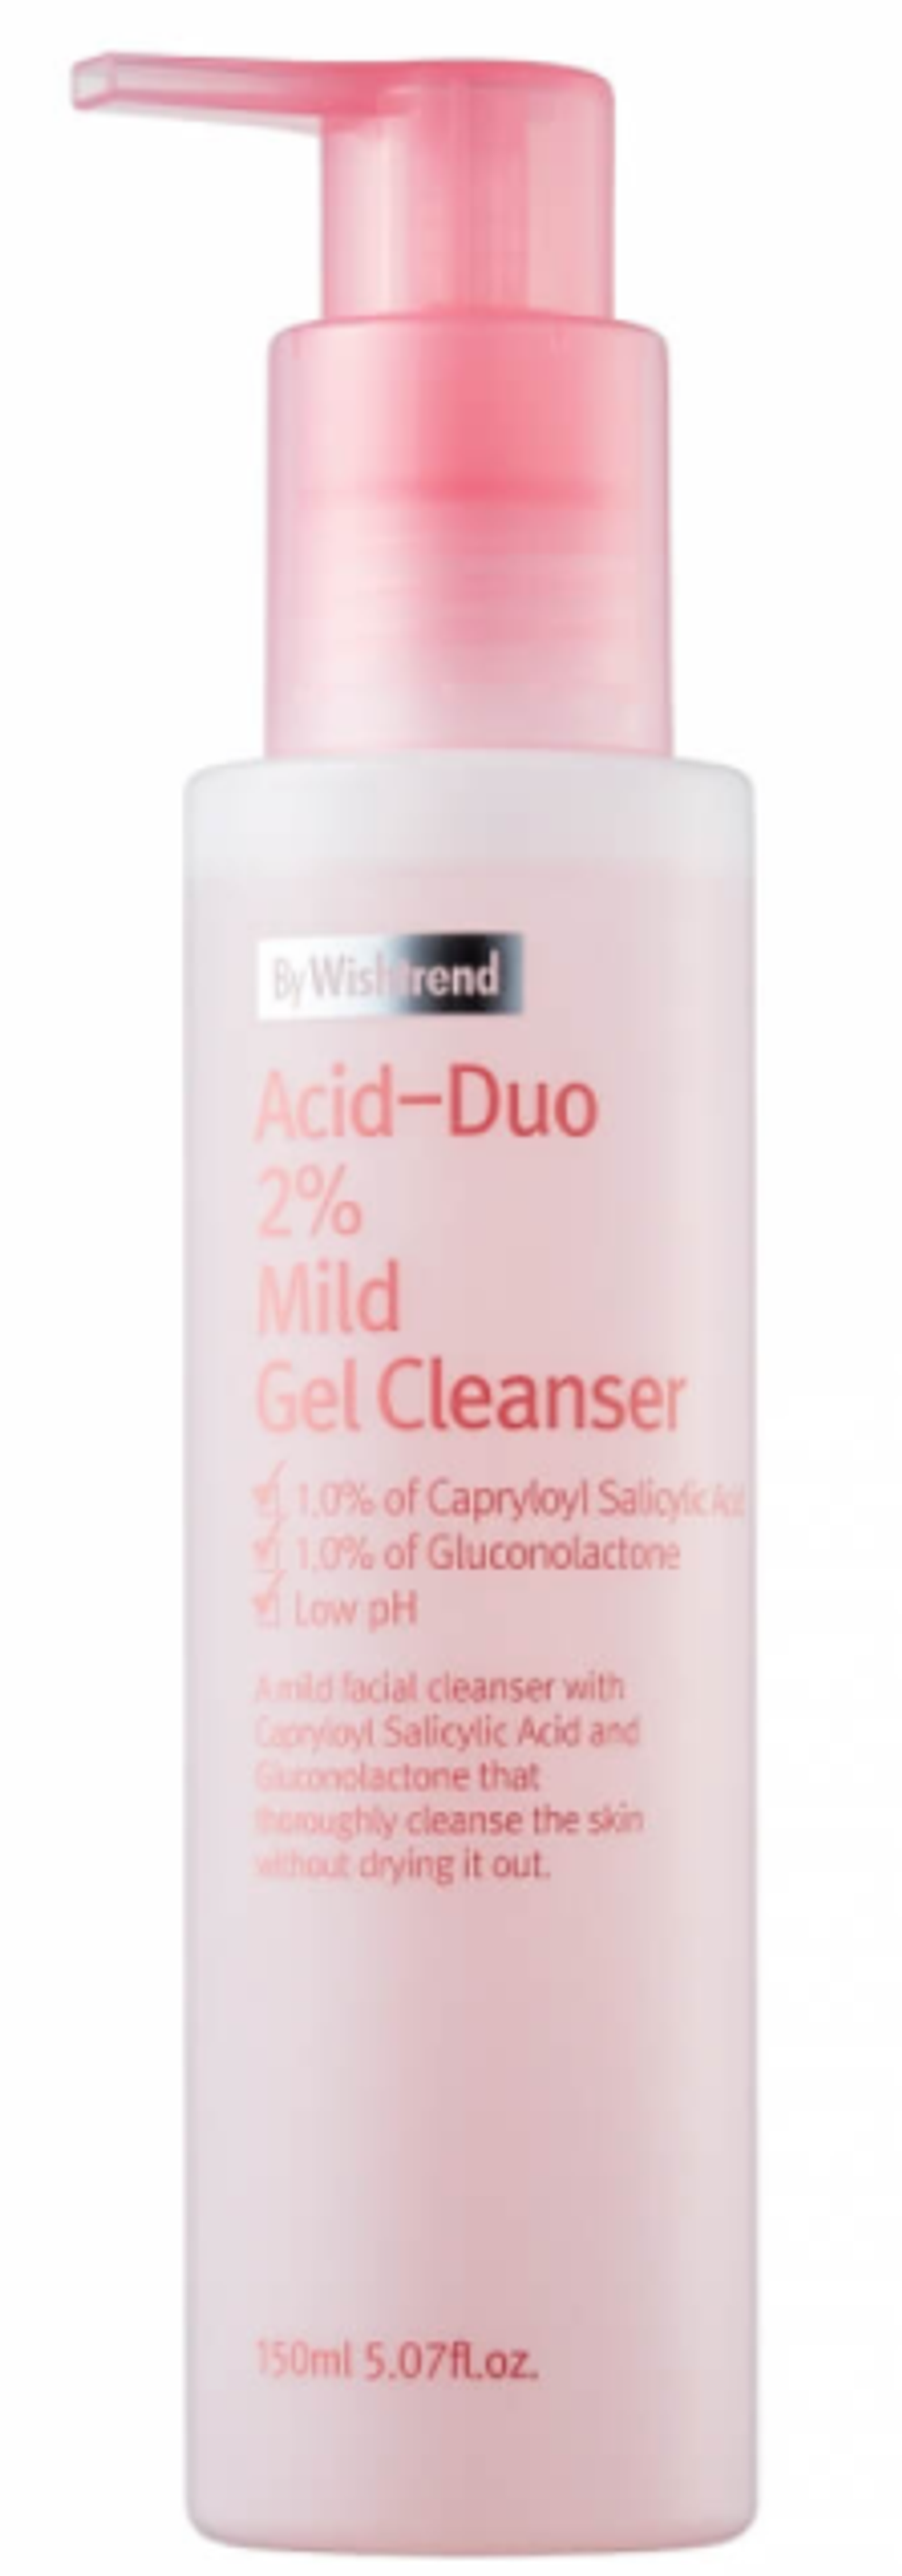 By Wishtrend Acid-Duo 2% Mild Gel Cleanser мягкий гель для умывания 150мл